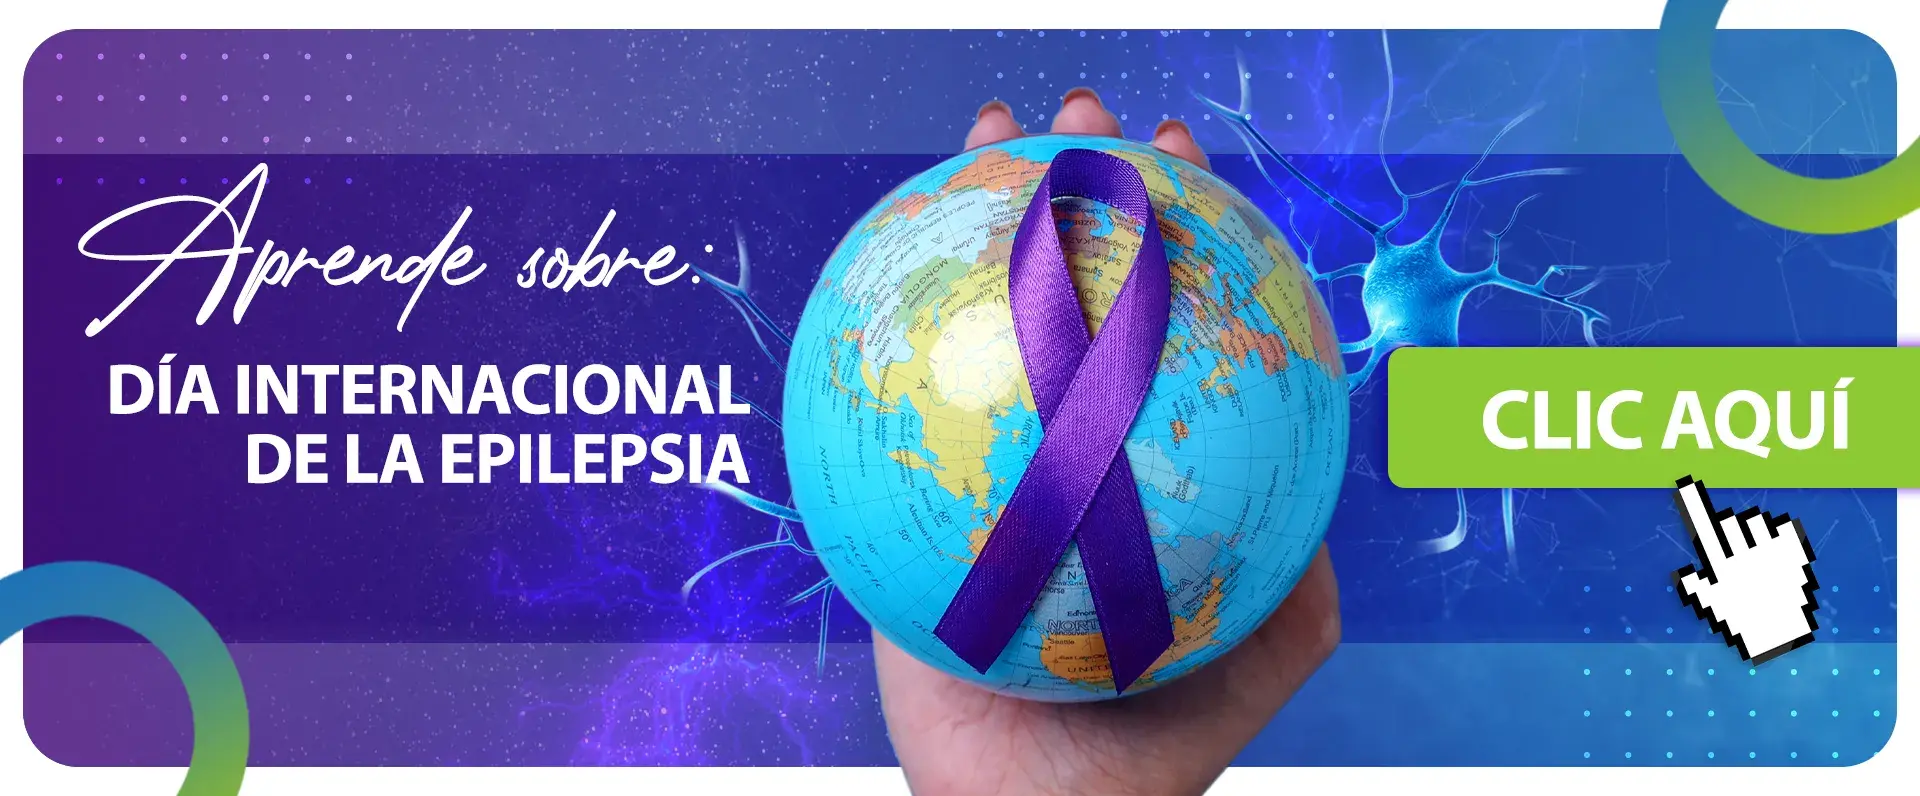 enlace a dia internacional de la epilepsia